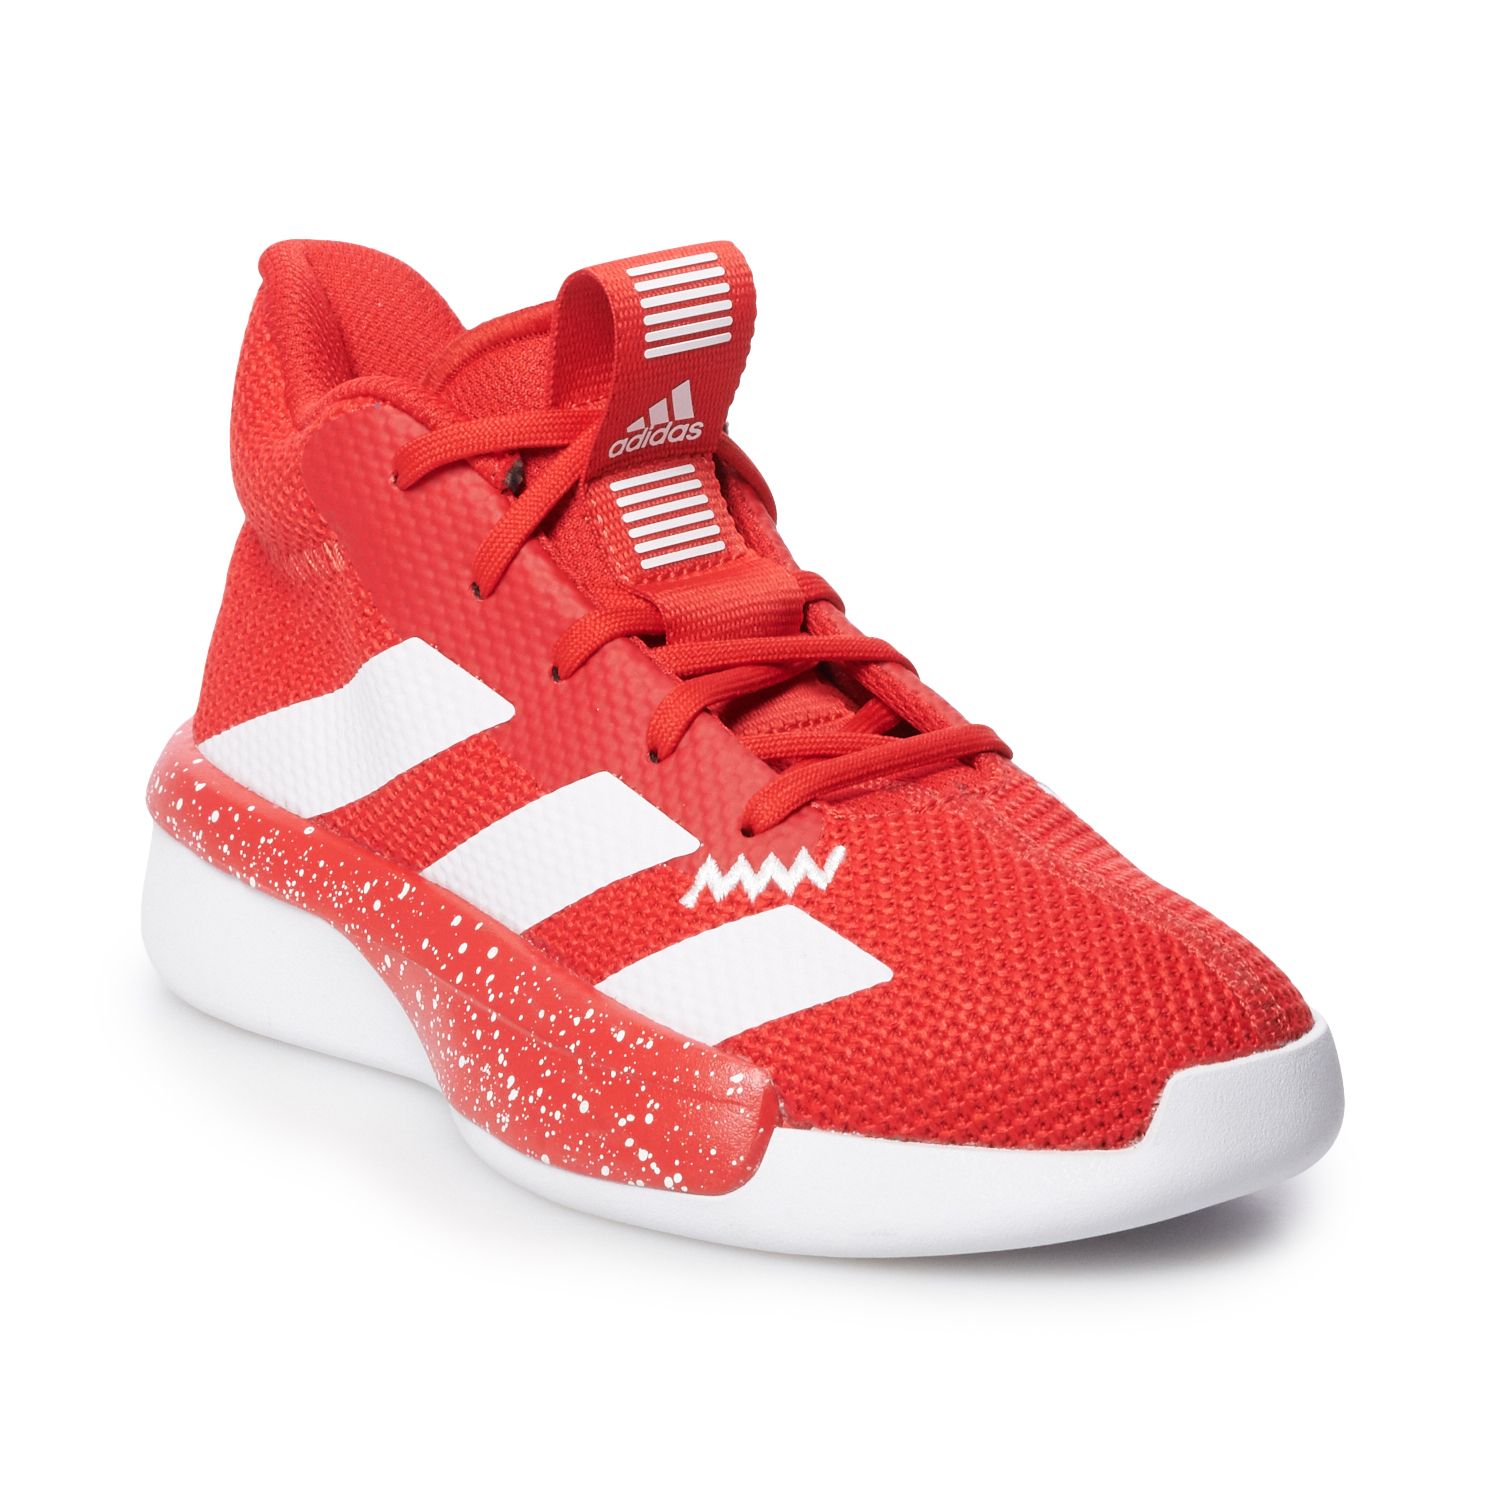 adidas Pro Next 2019 Boys' Basketball Shoes